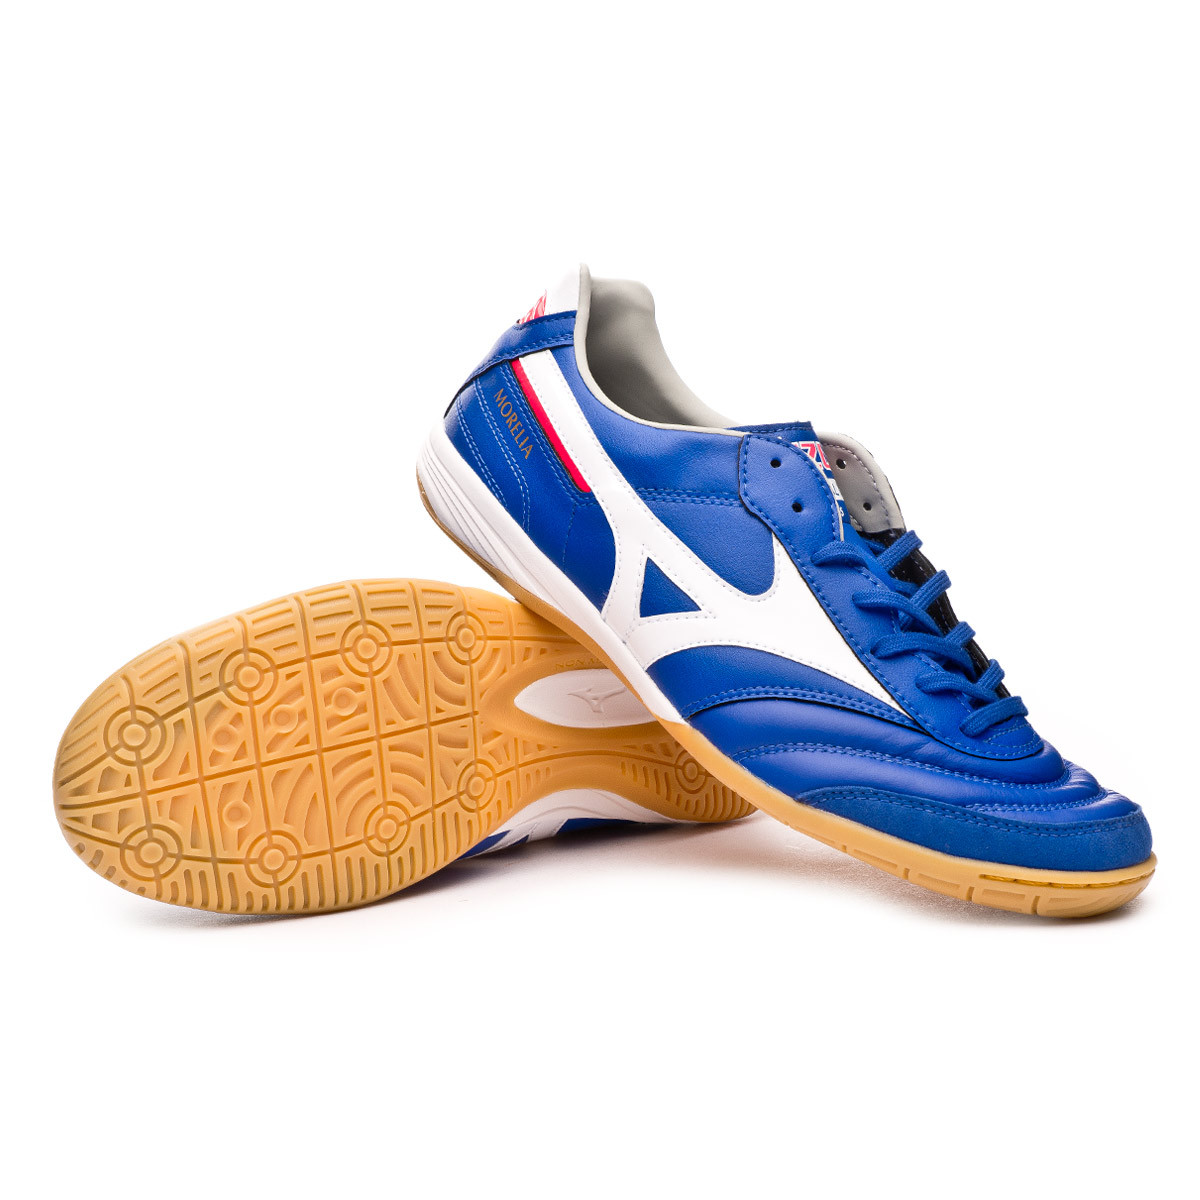 New Mizuno Futsal shoes Morelia TF Q1GB1600 Freeshipping!!